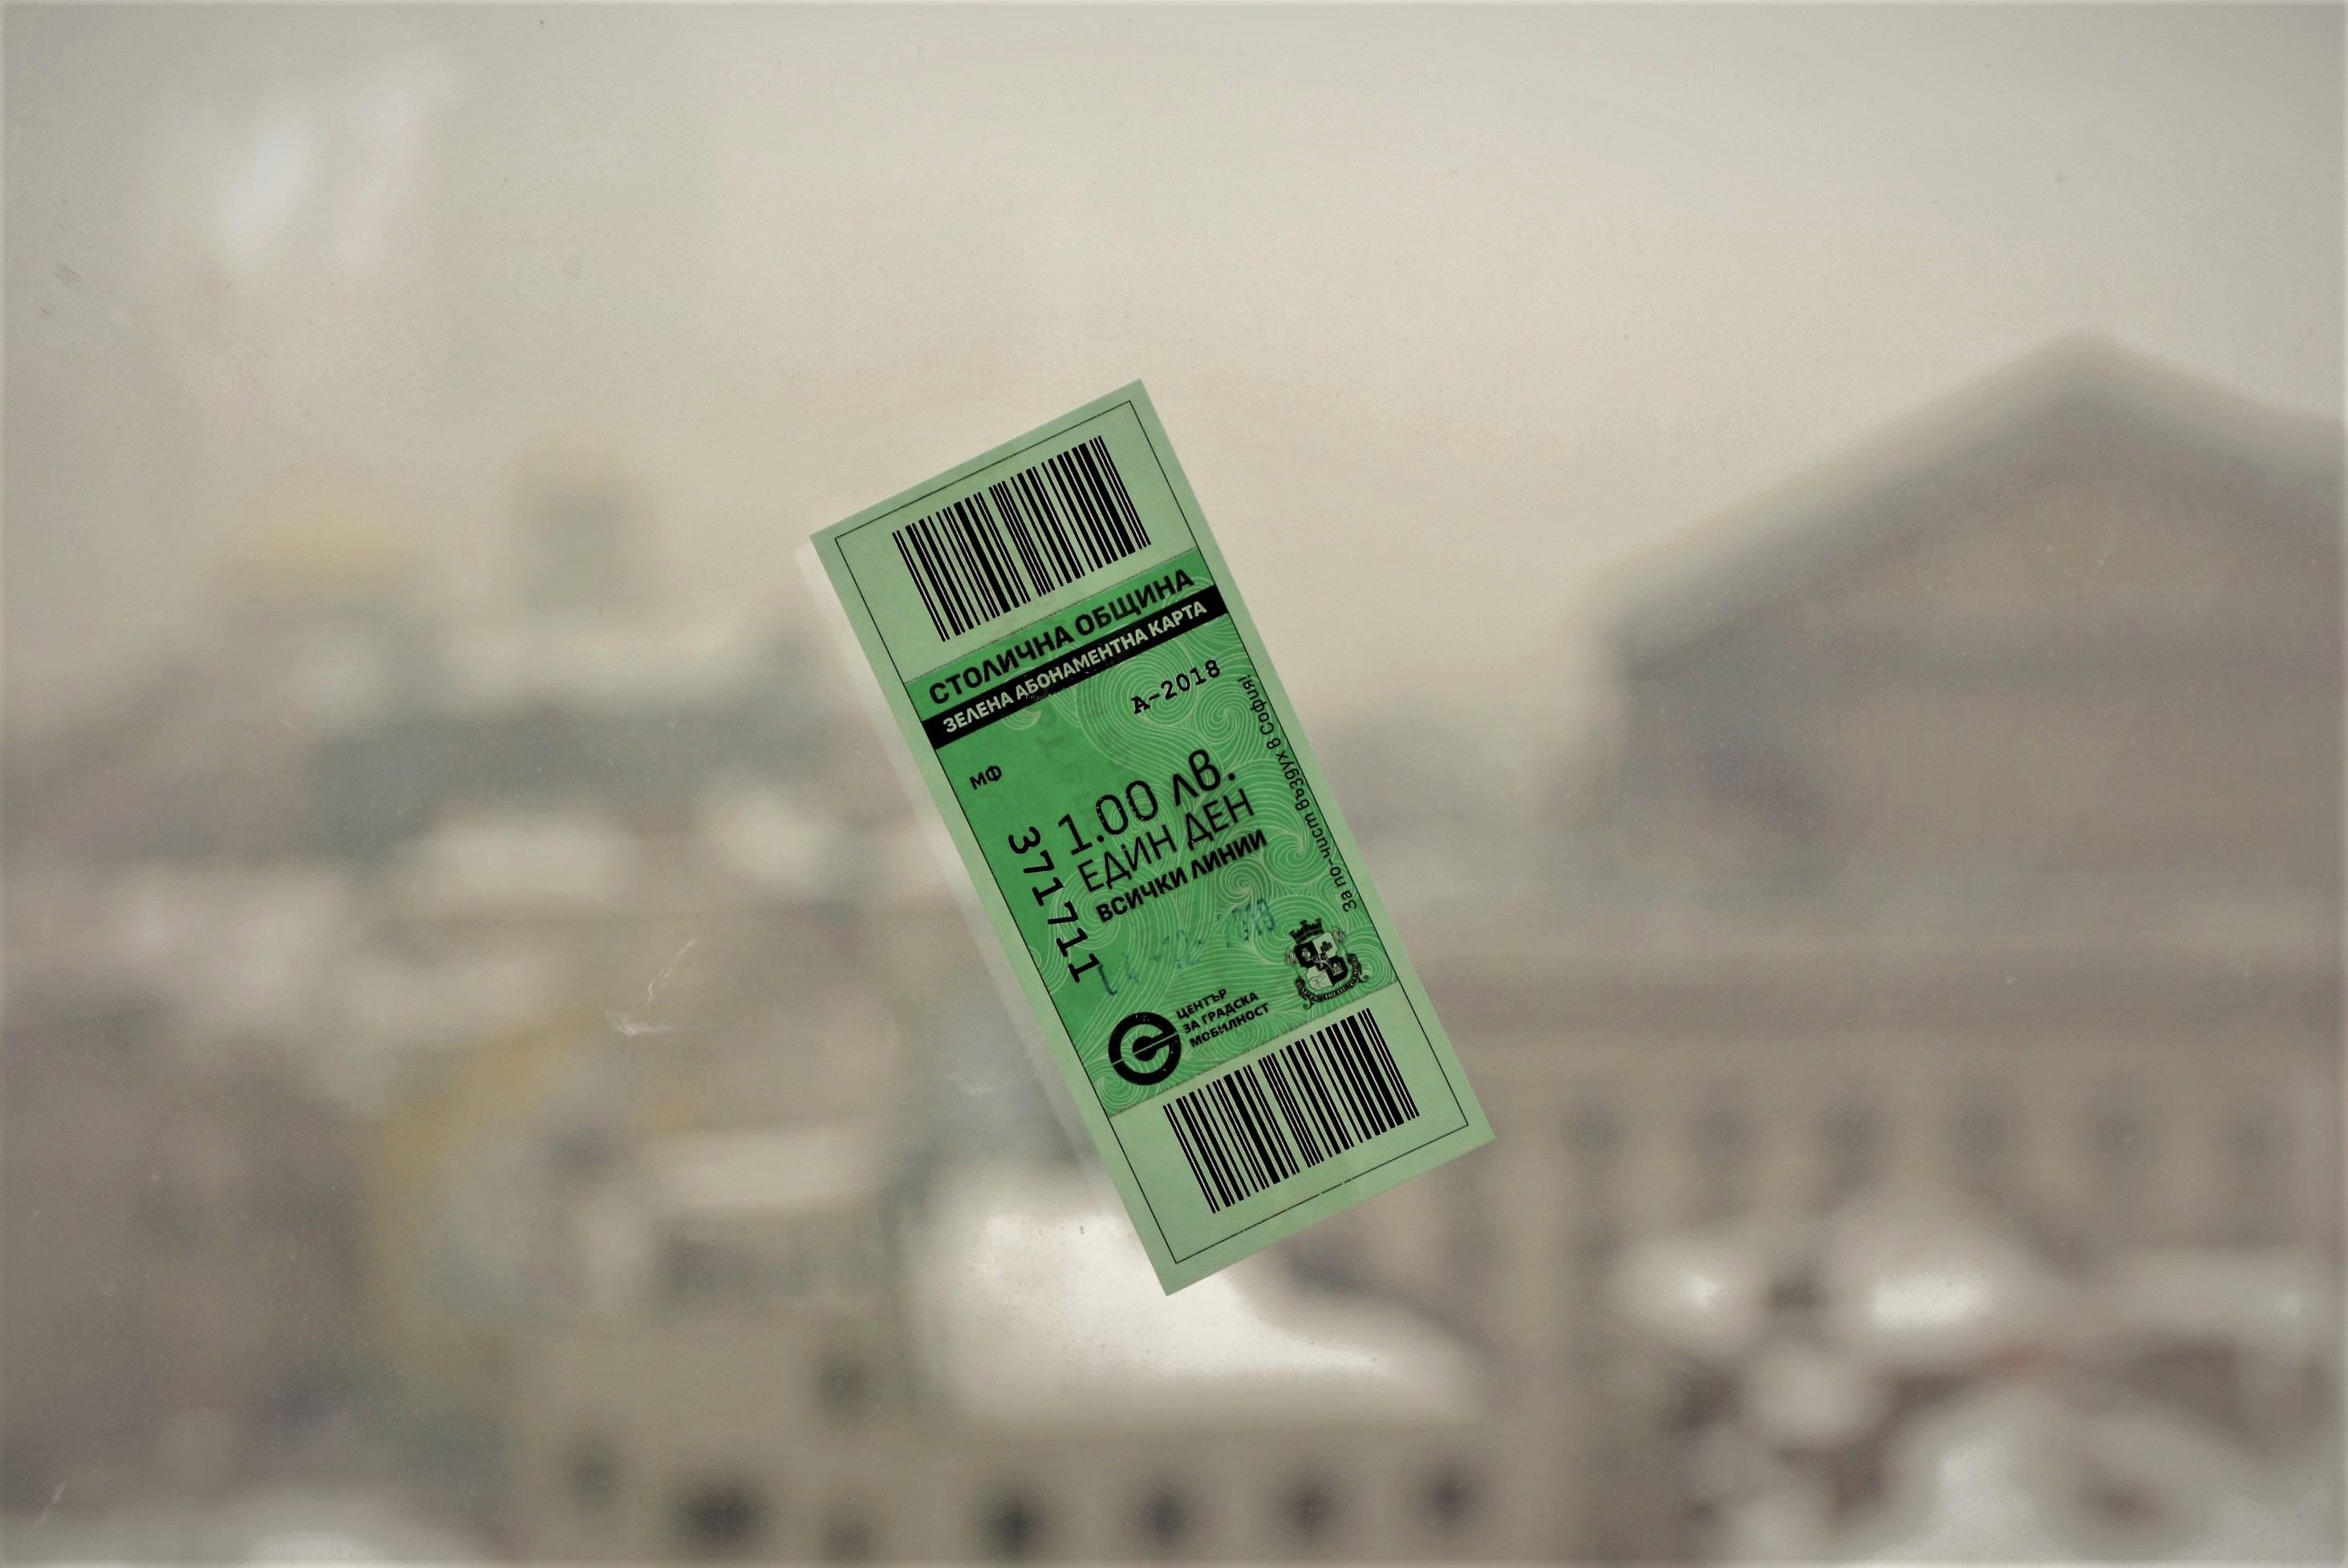 Зелен билет за градския транспорт